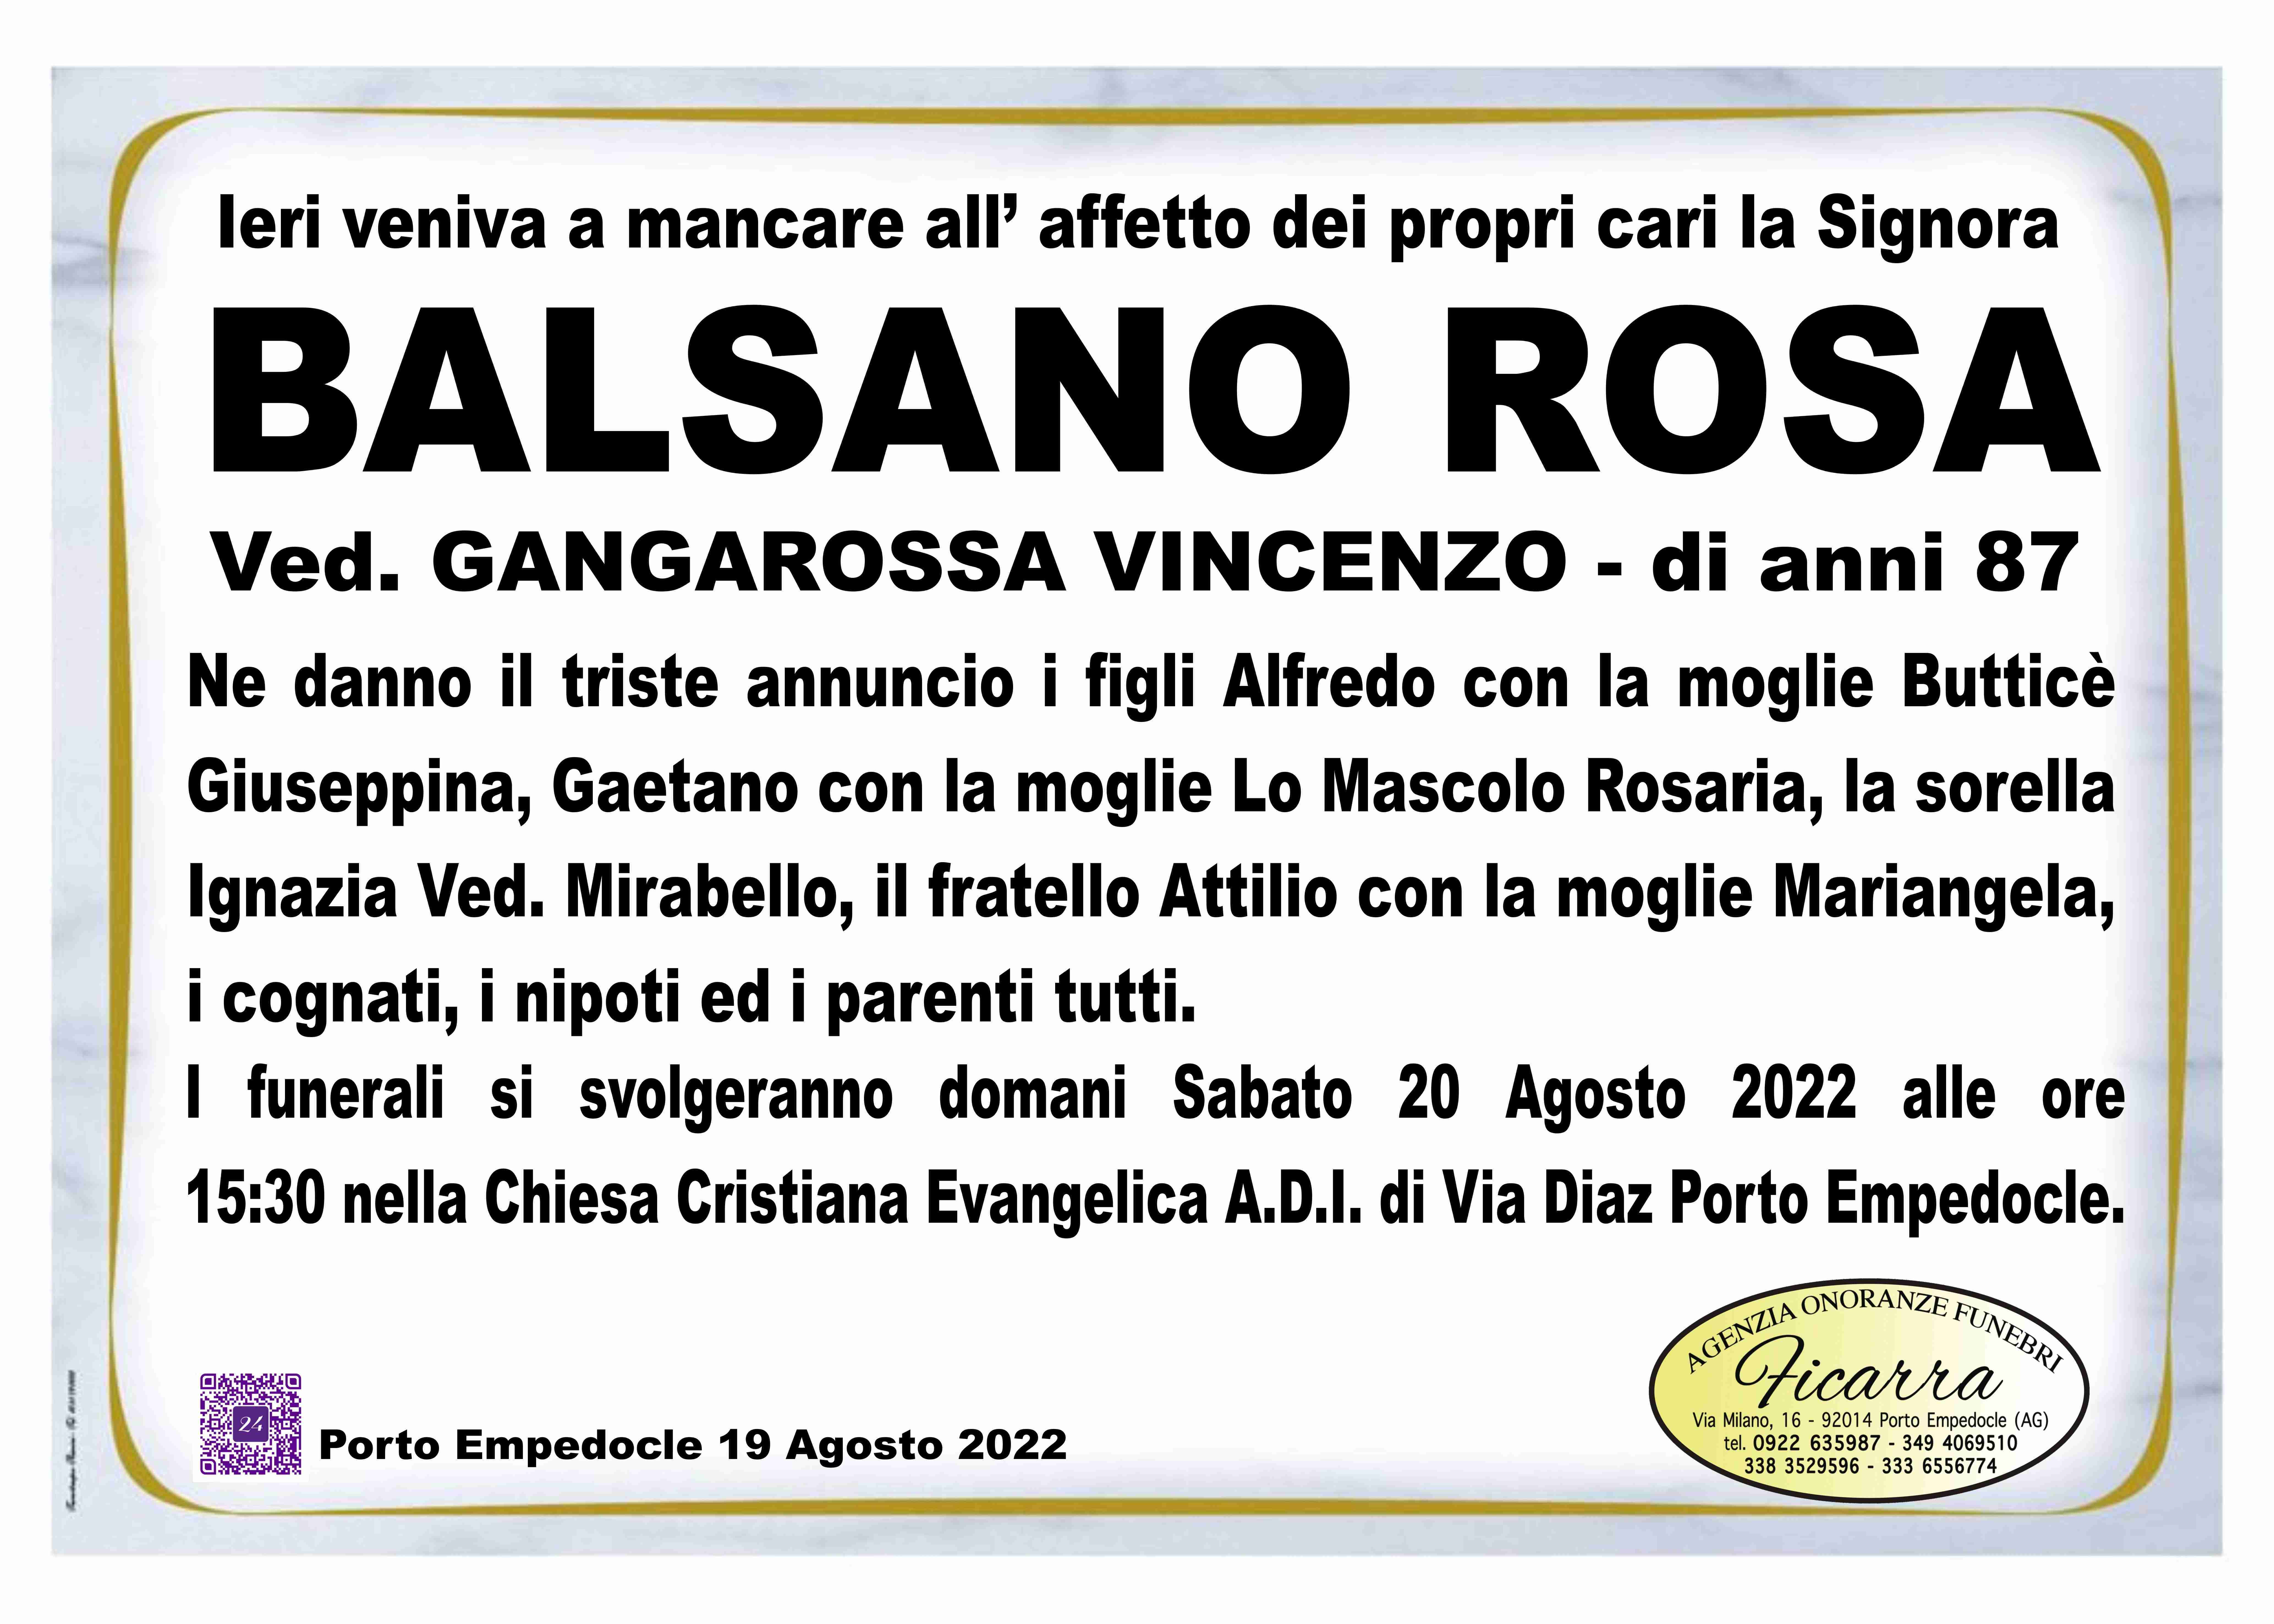 Rosa Balsano